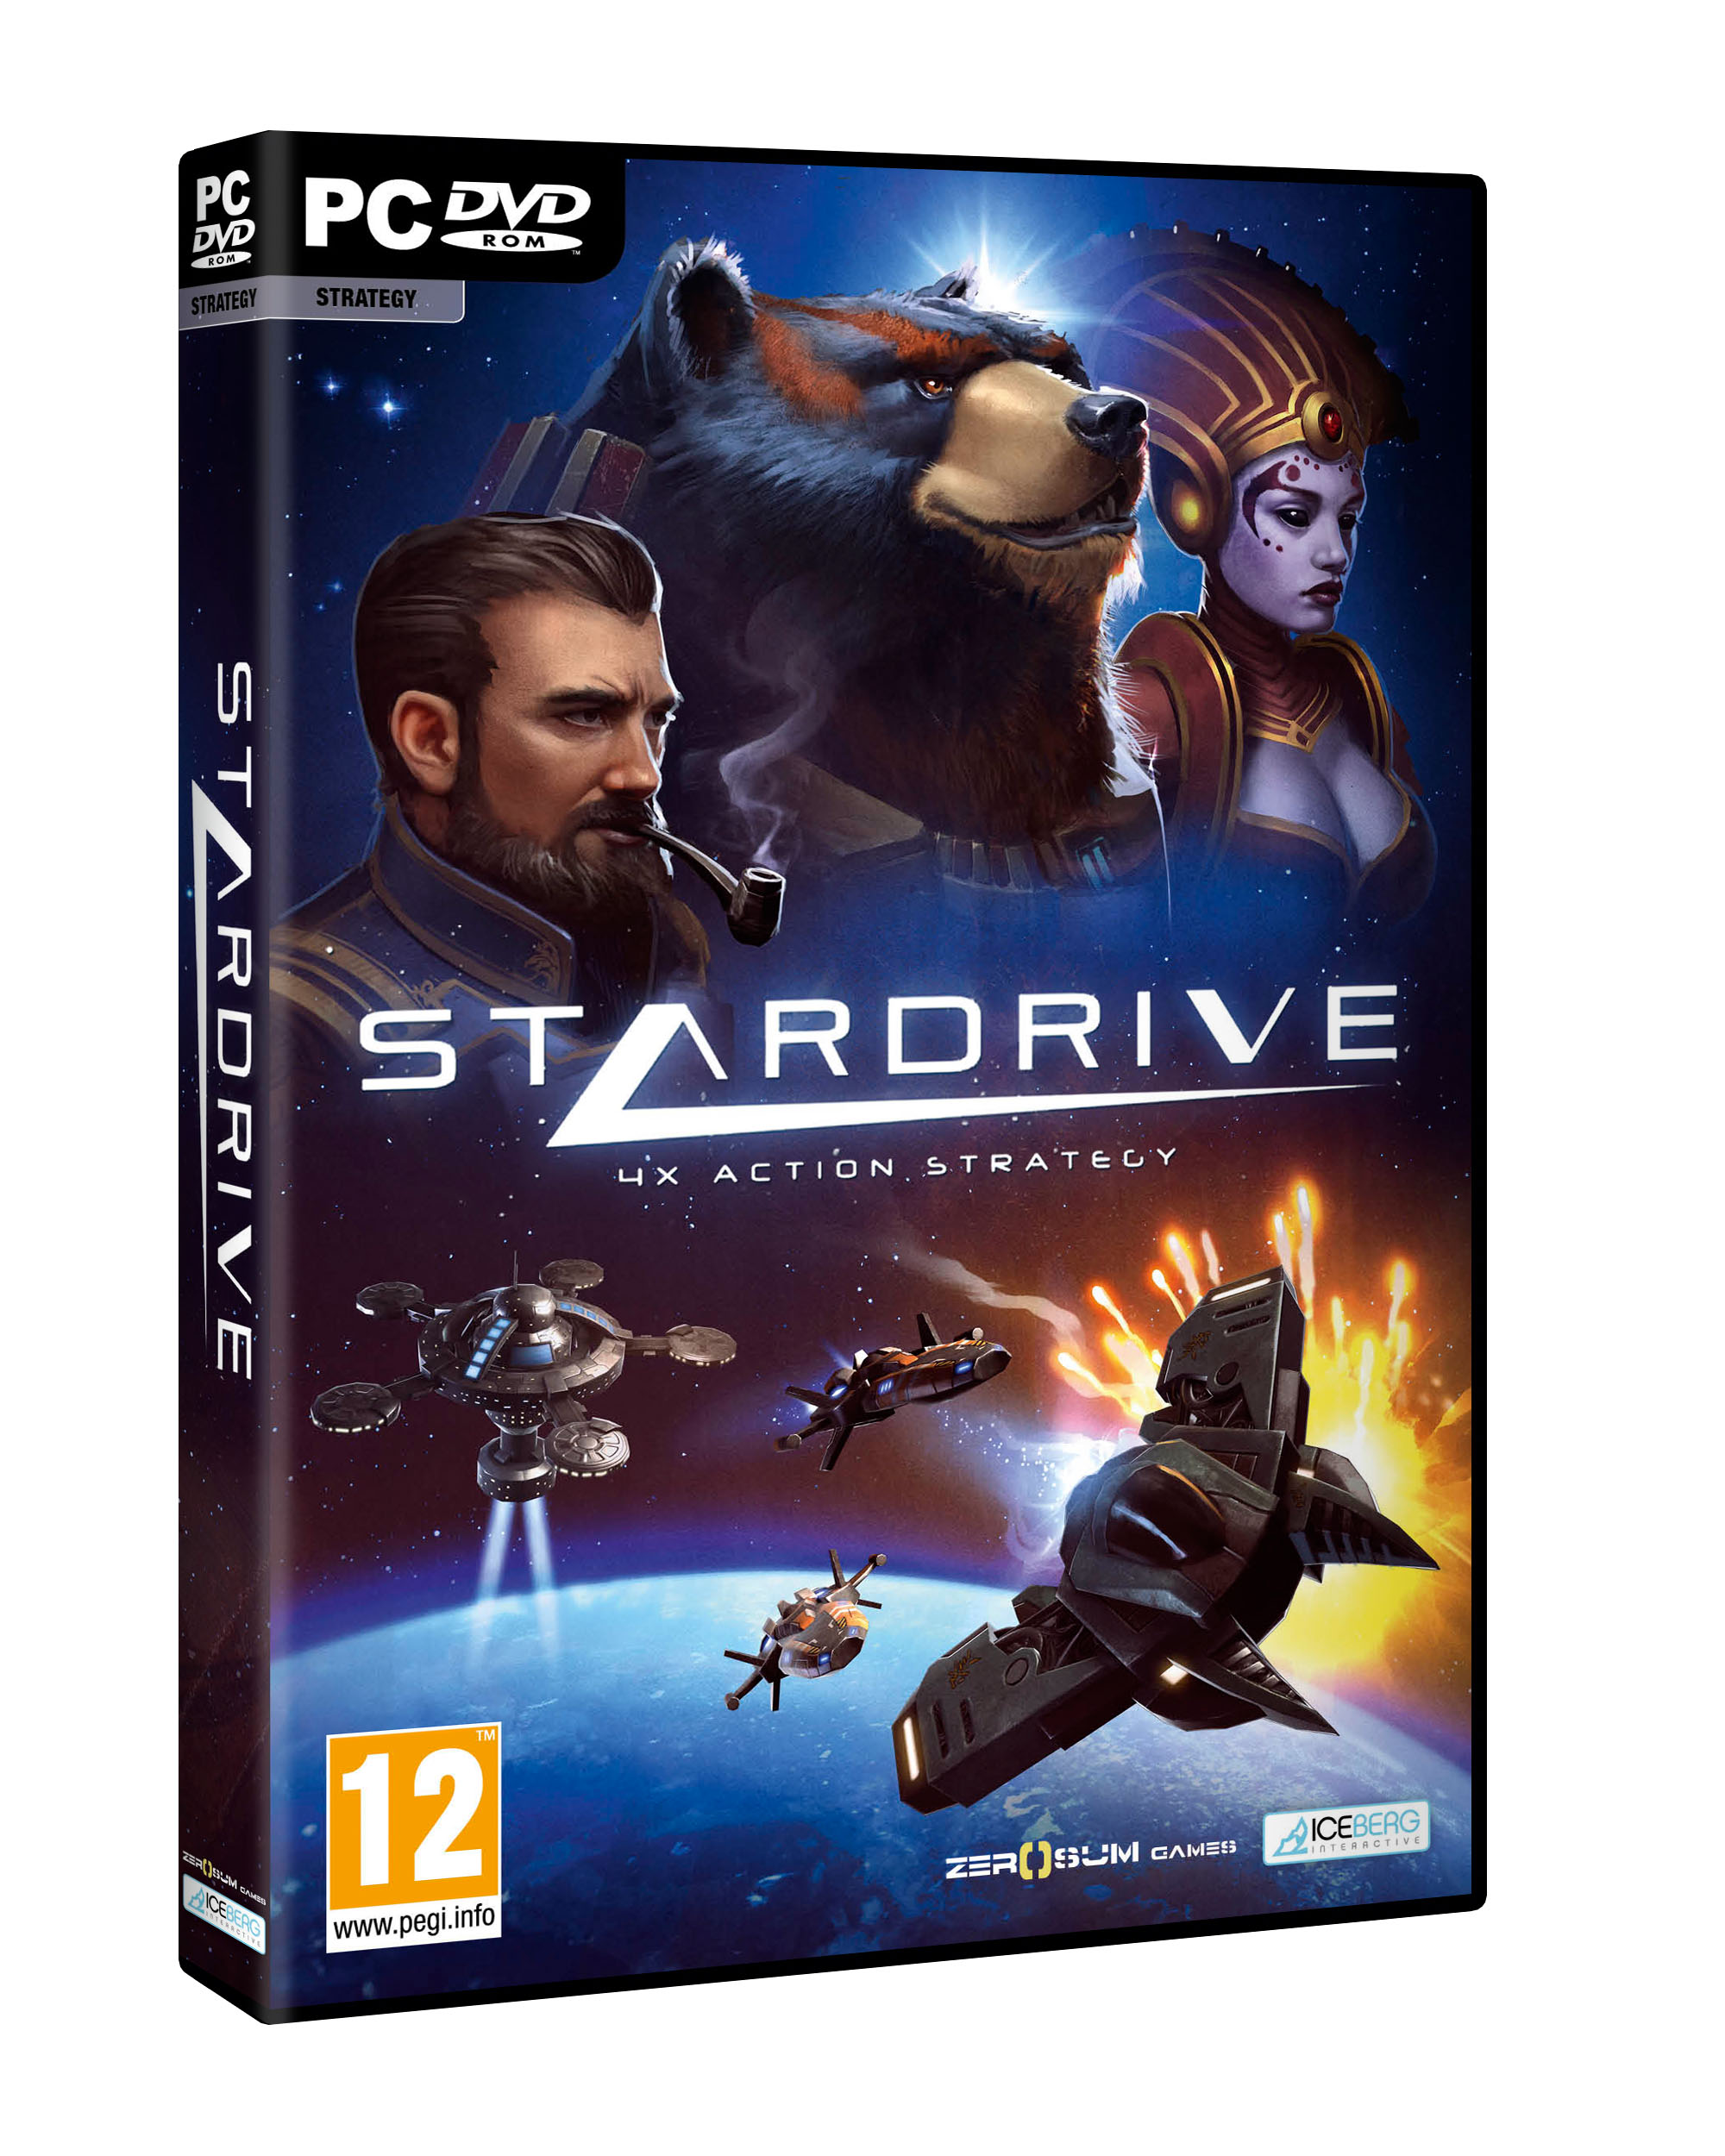 StarDrive PC Game Free Download 1 GB